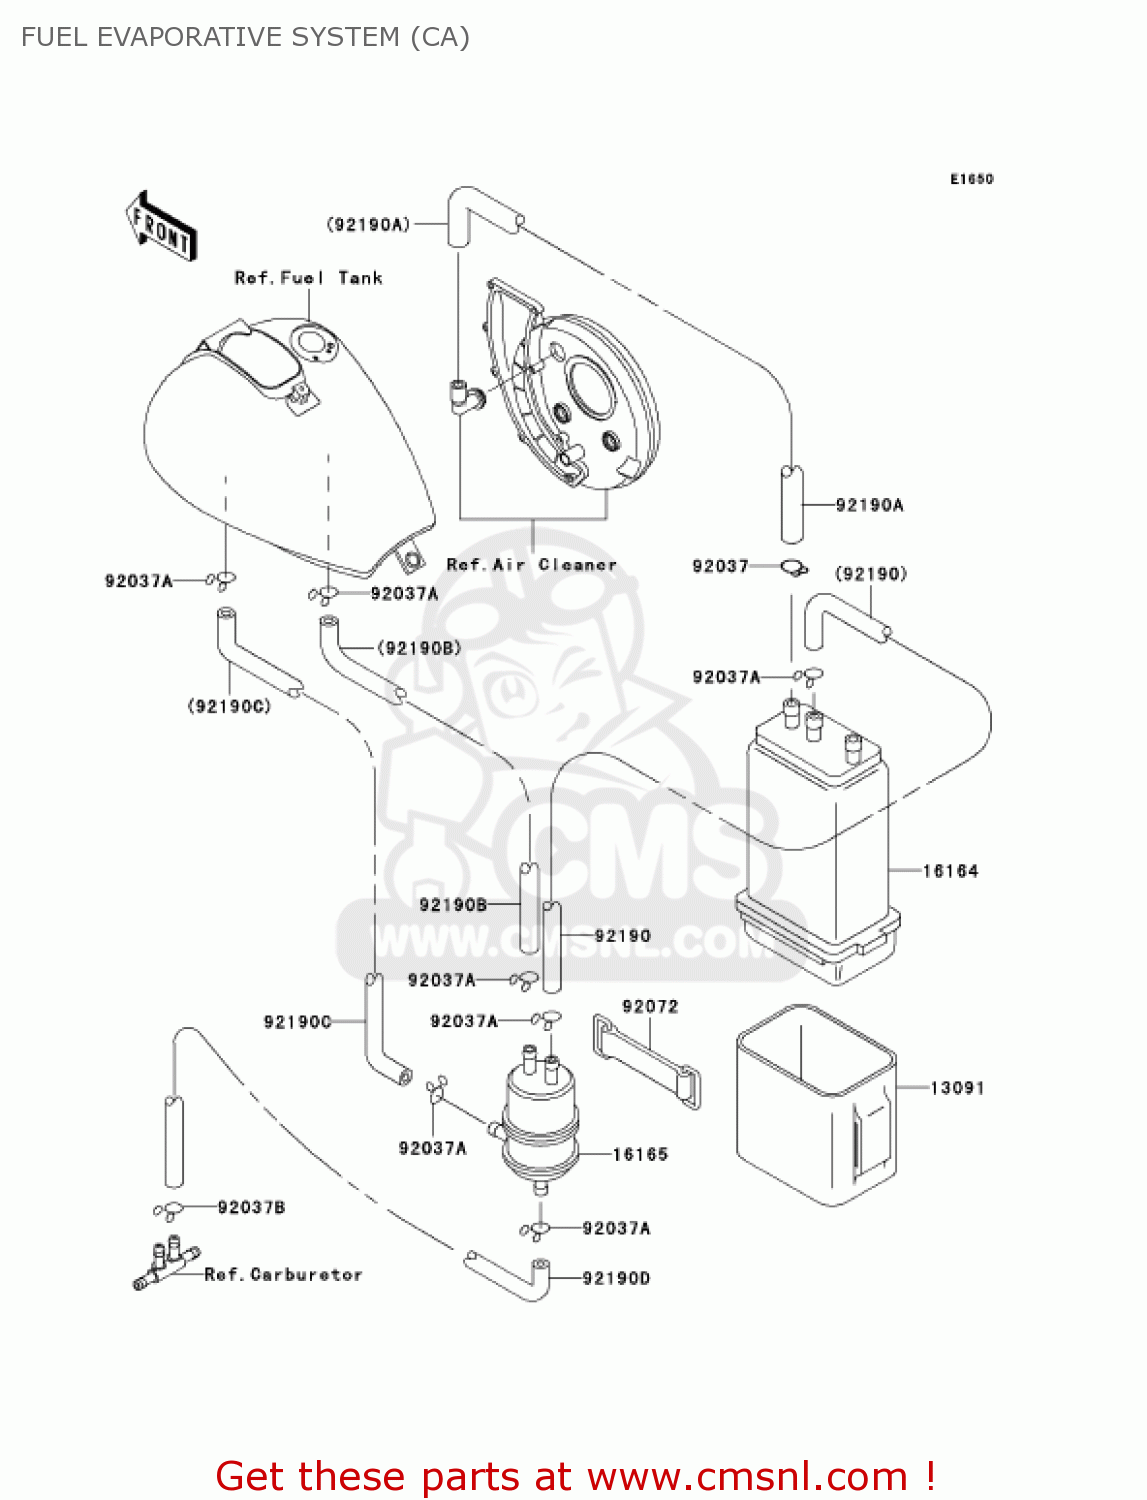 vn800 wiring diagram